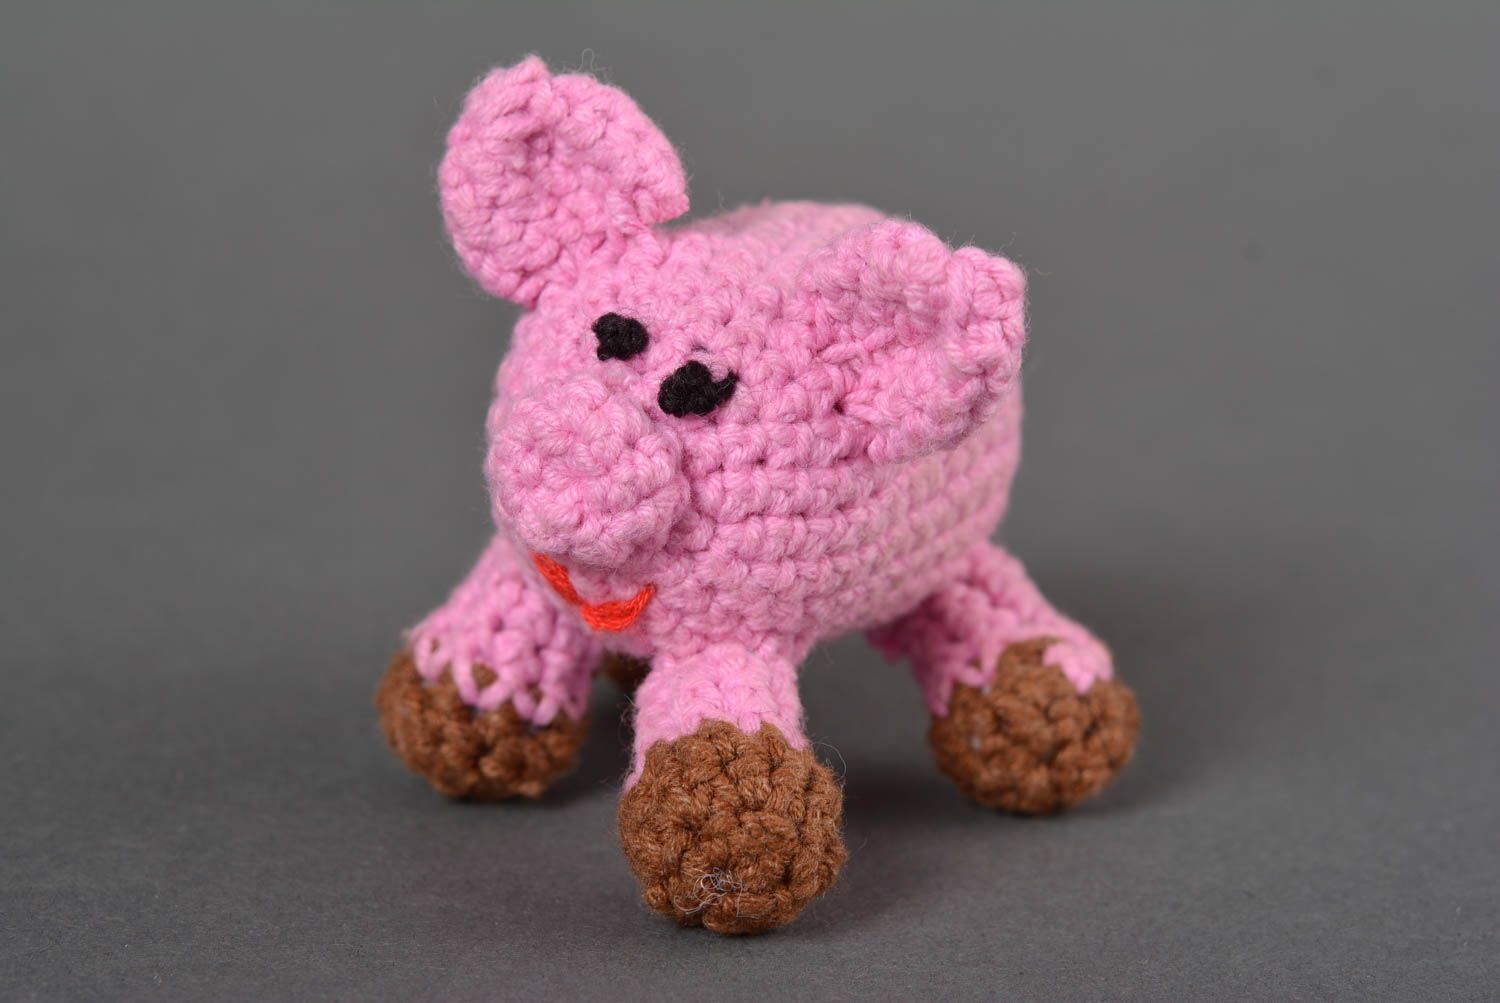 Unuusal handmade crochet soft toy baby rattle best toys for kids stuffed toy photo 1